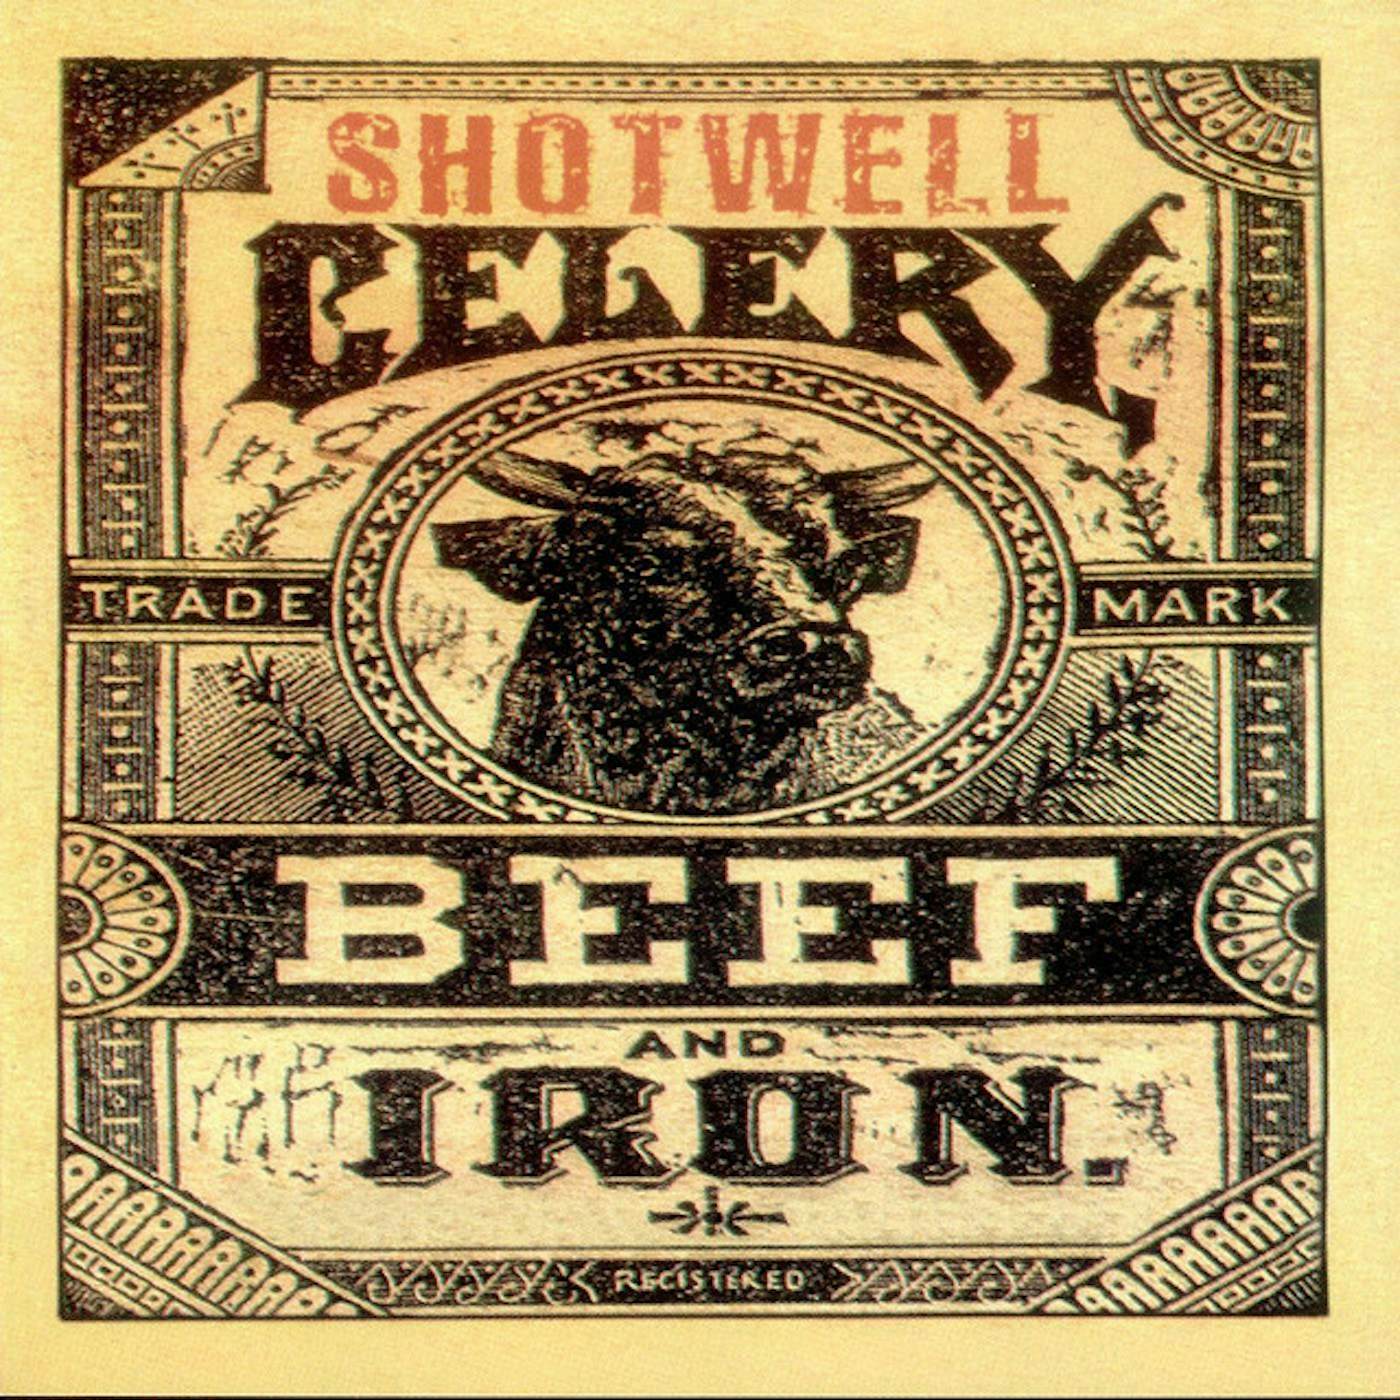 Shotwell CELERY BEEF & IRON (10") Vinyl Record